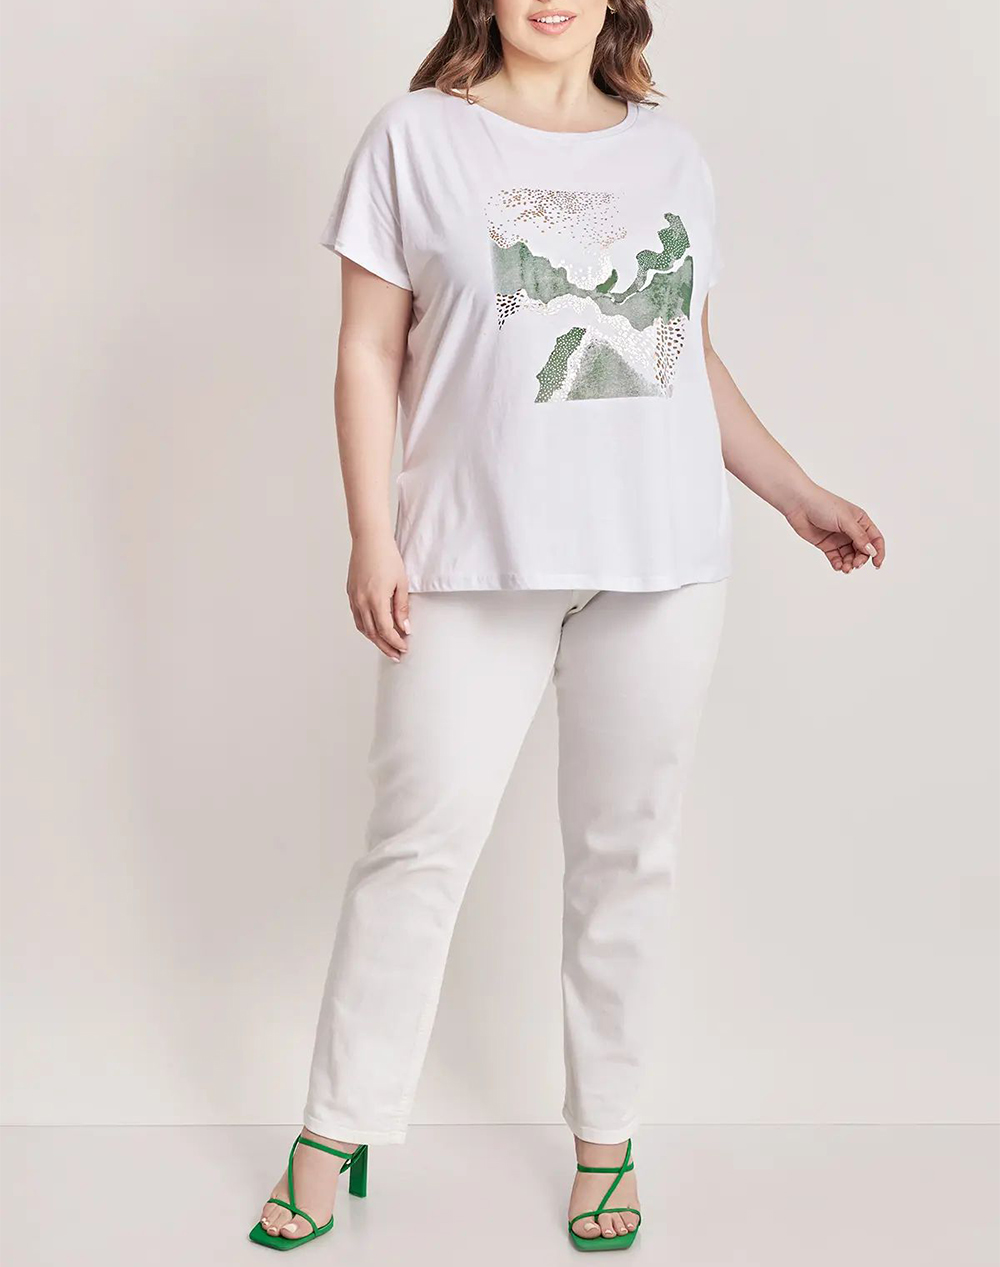 PARABITA T-shirt de dama cu model tiparit